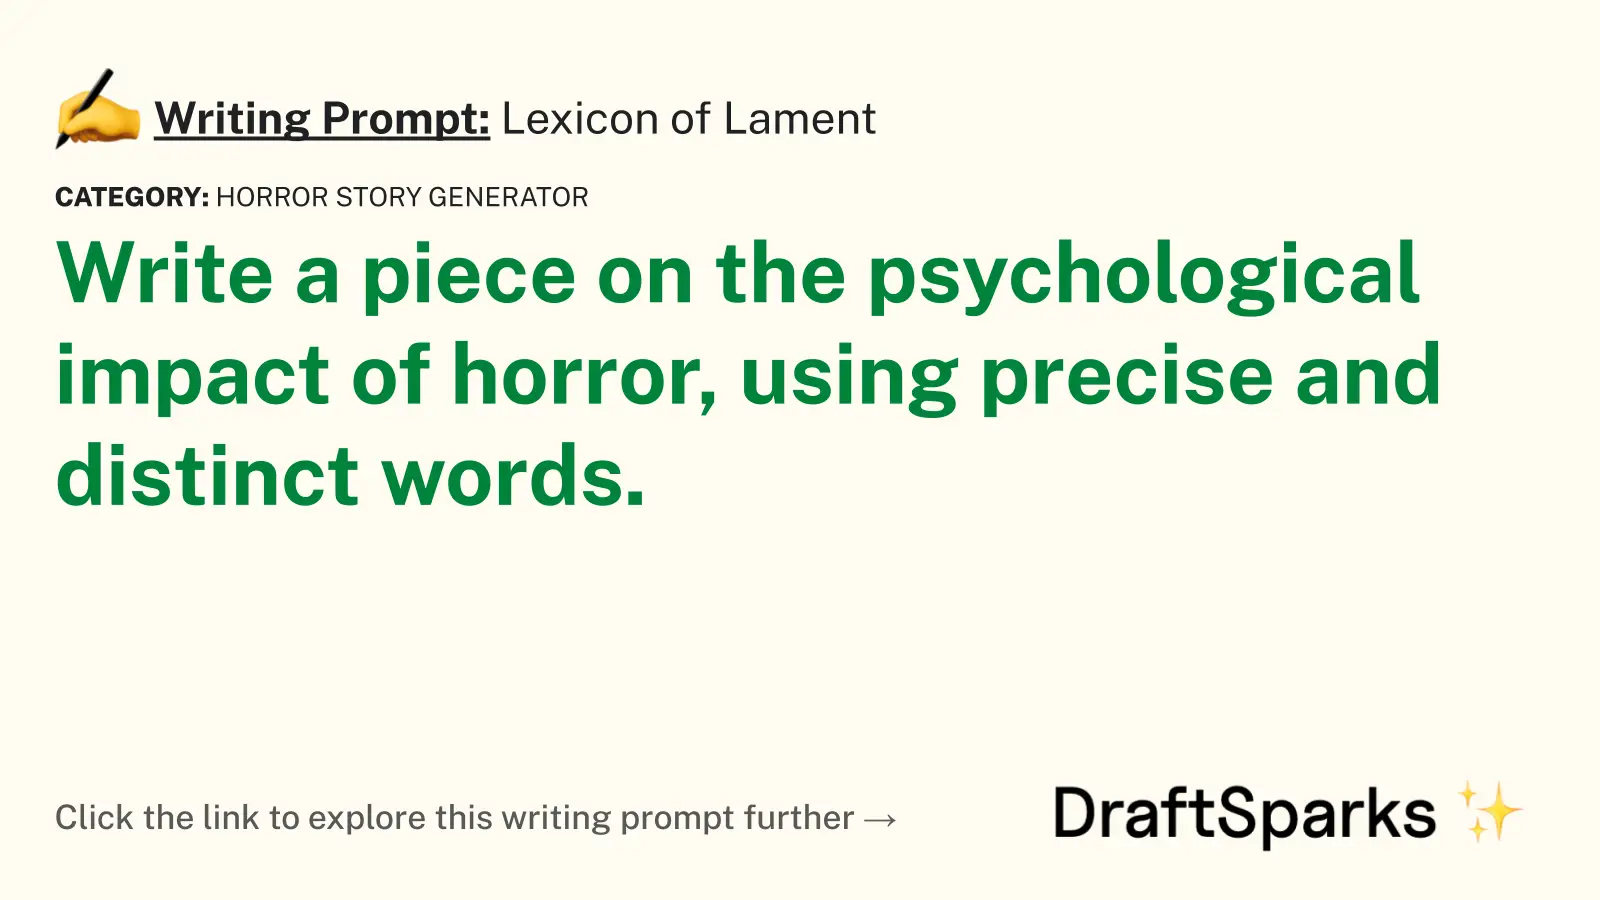 Lexicon of Lament